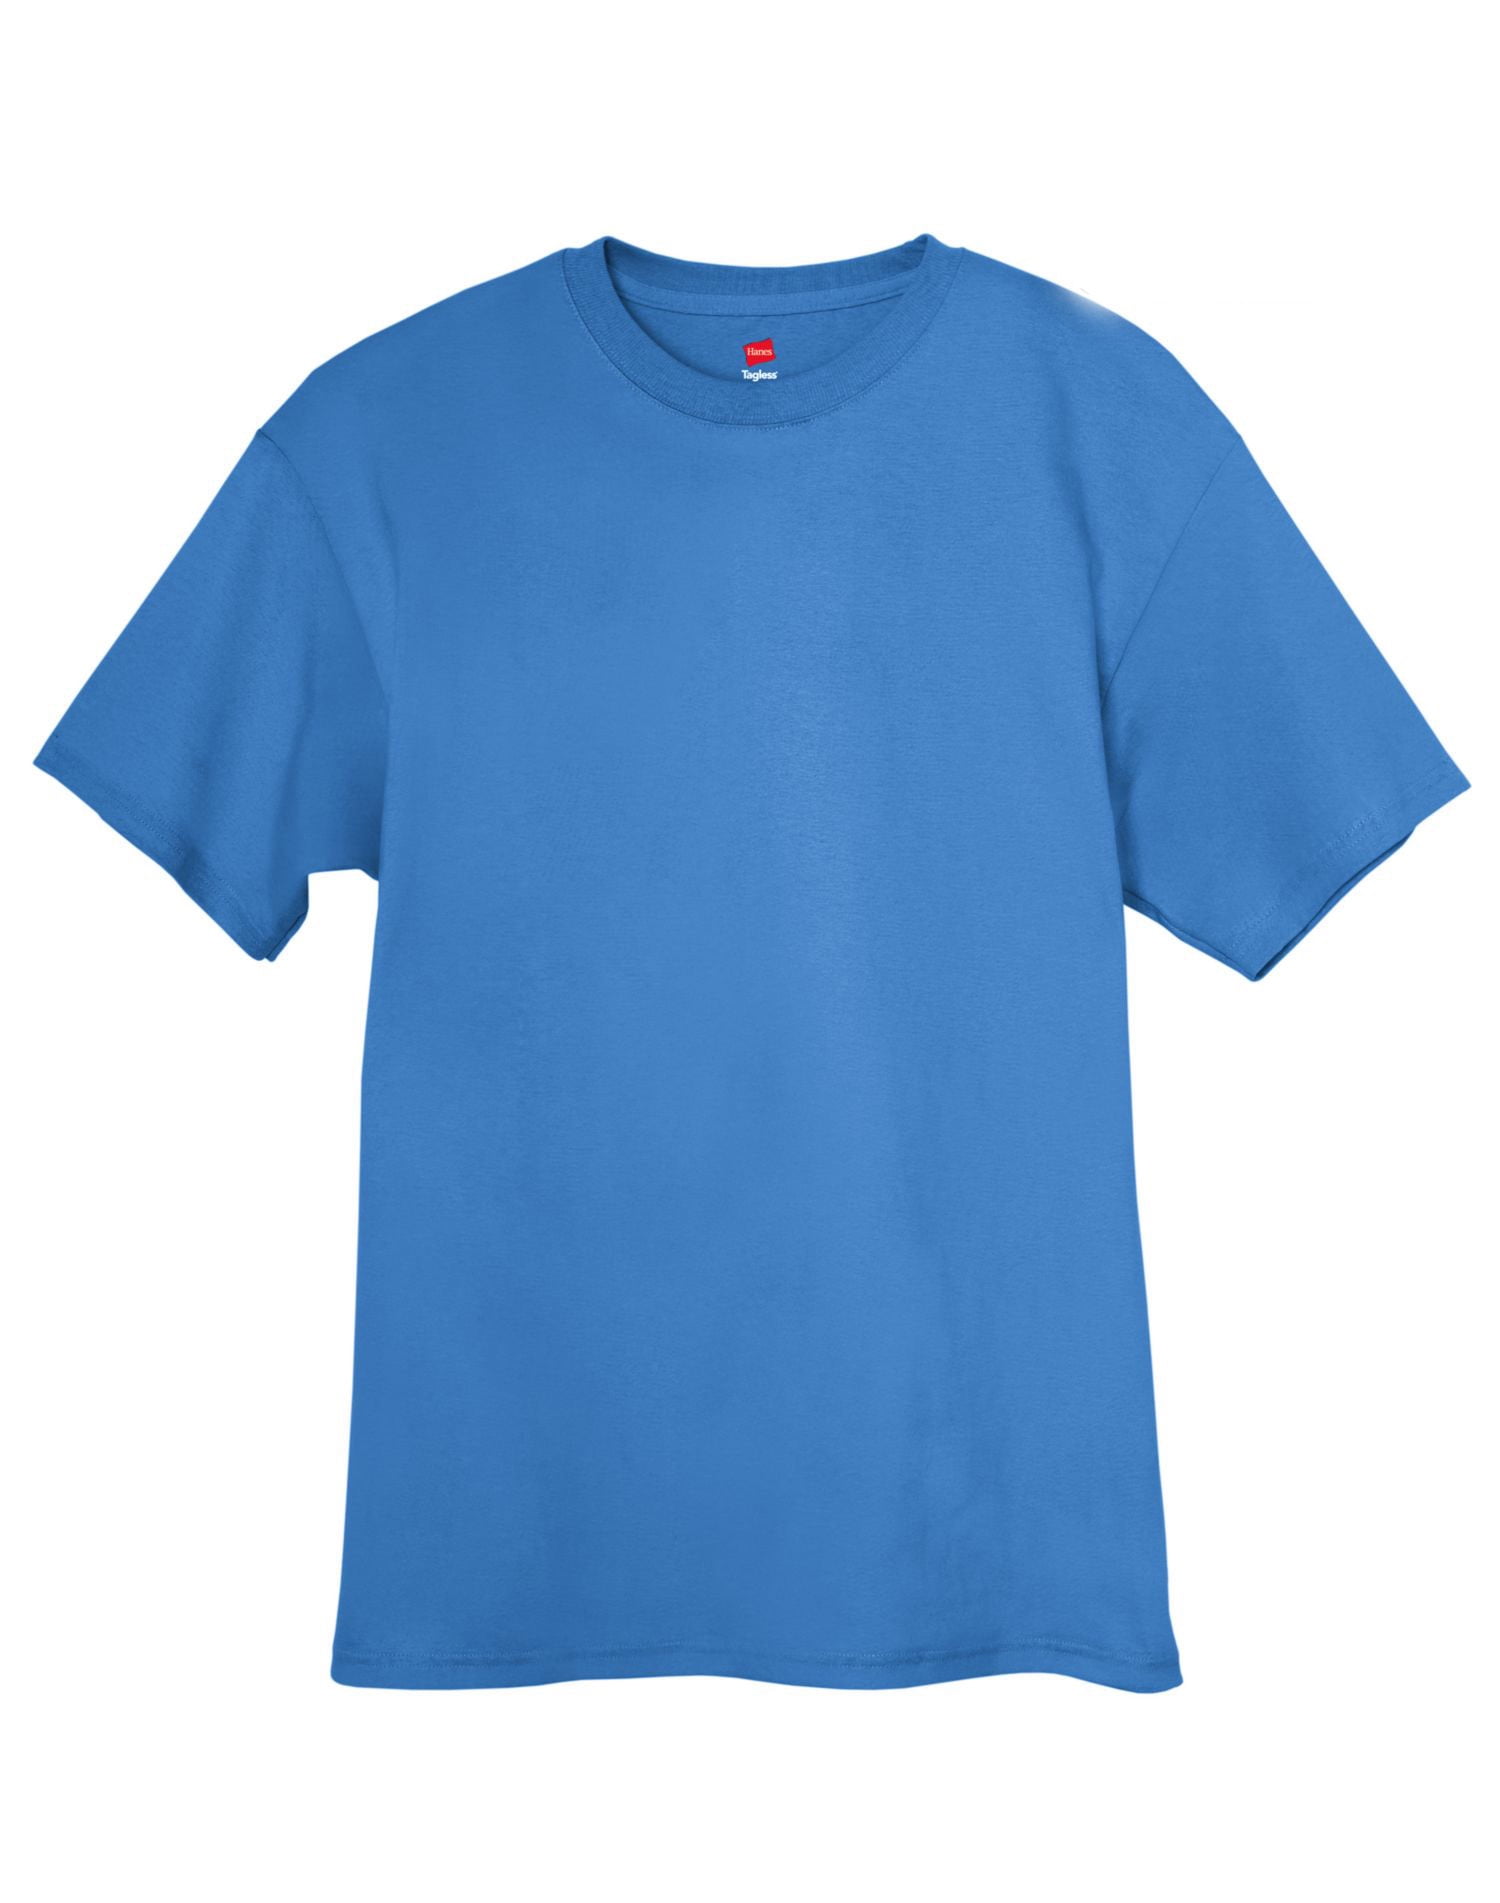 Soft Viking Hanes Tagless Tee T-Shirt Hanes Tagless Tee T-Shirt 